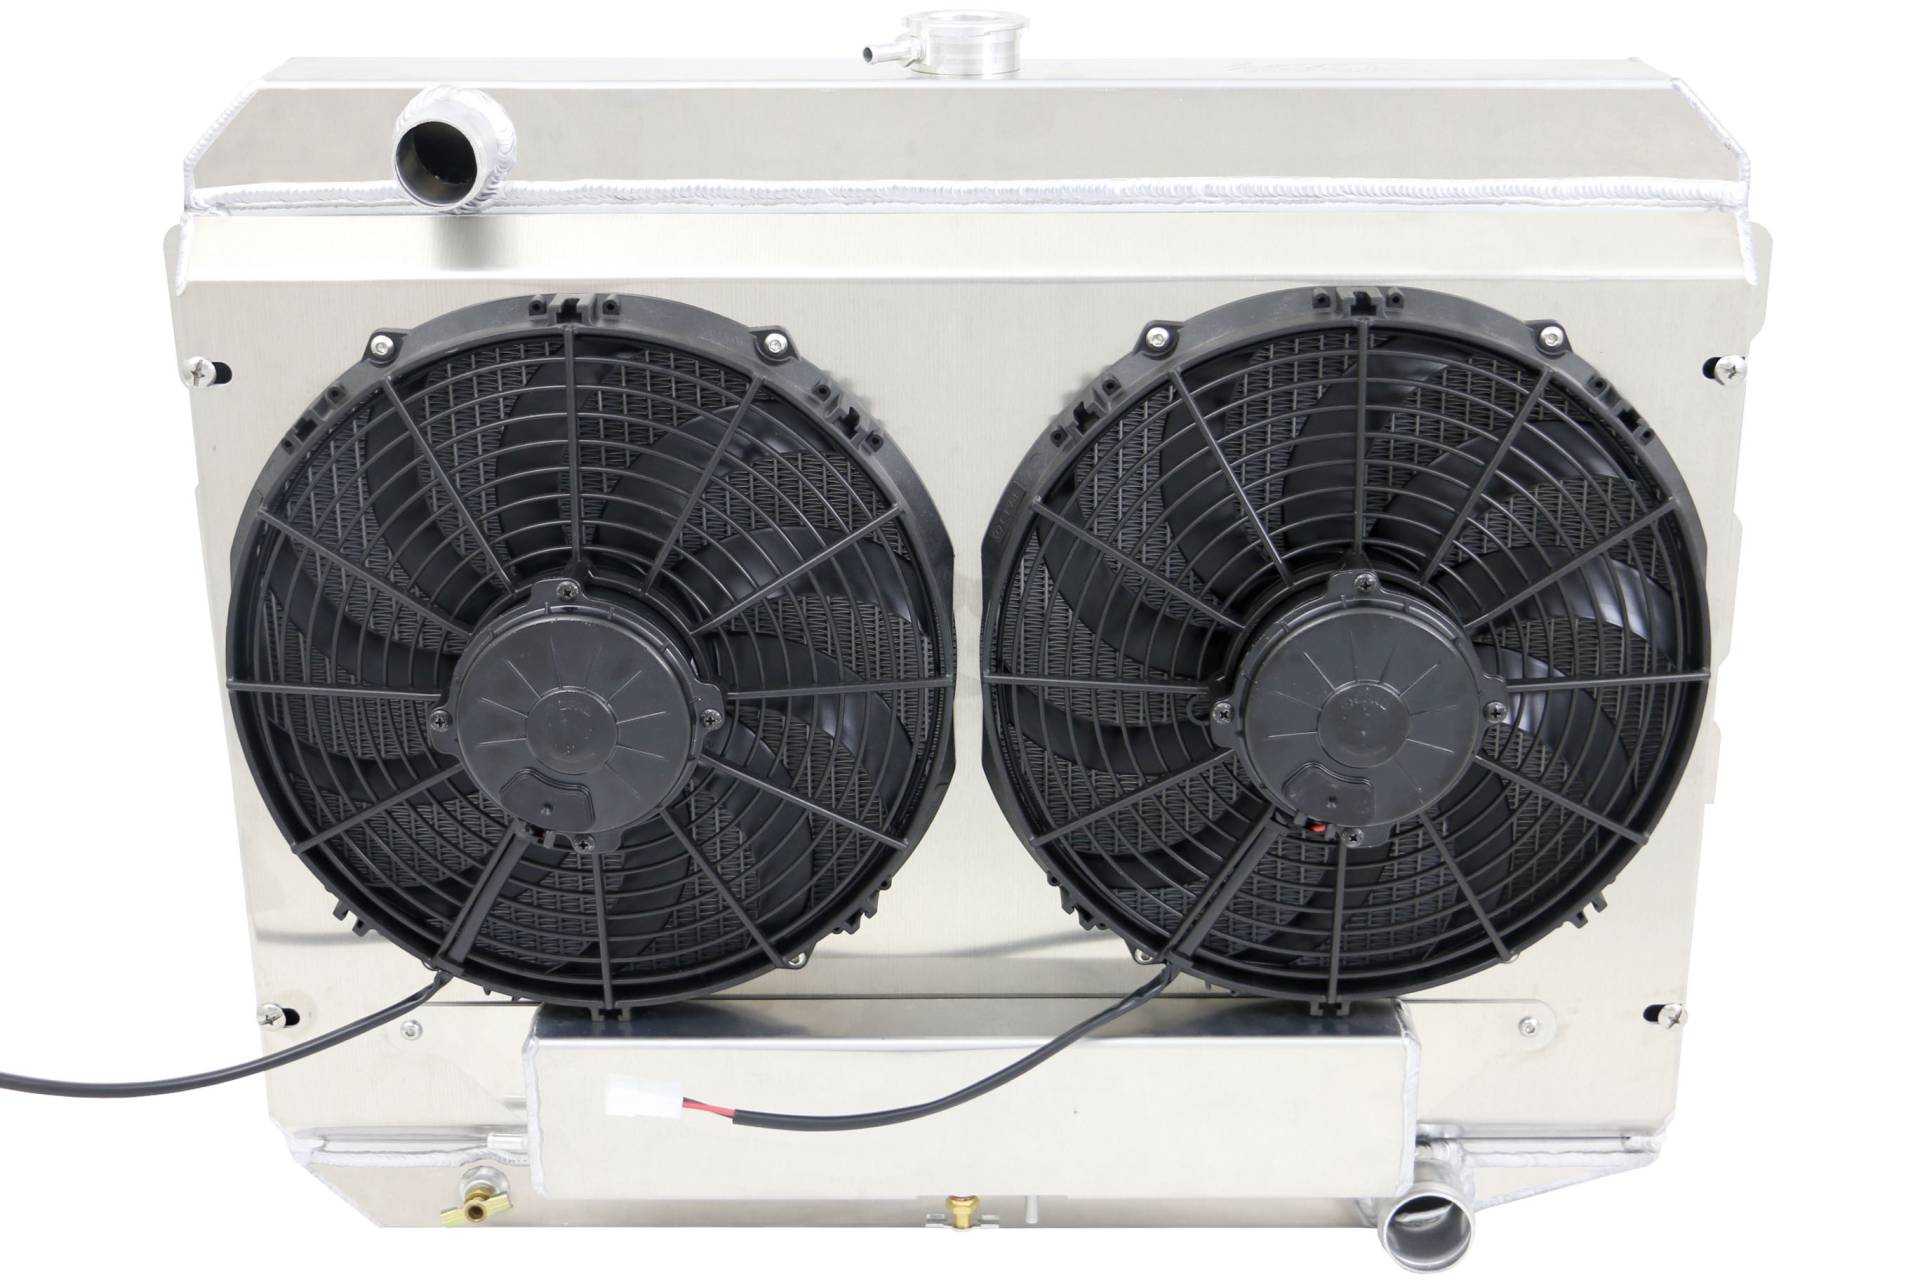 Wizard Cooling Inc - Wizard Cooling - 1970-1973 26" S/B Mopar Applications Aluminum Radiator (w/ MEDIUM PROFILE Fan, Shroud, And Expansion Tank) - 374-202MDX